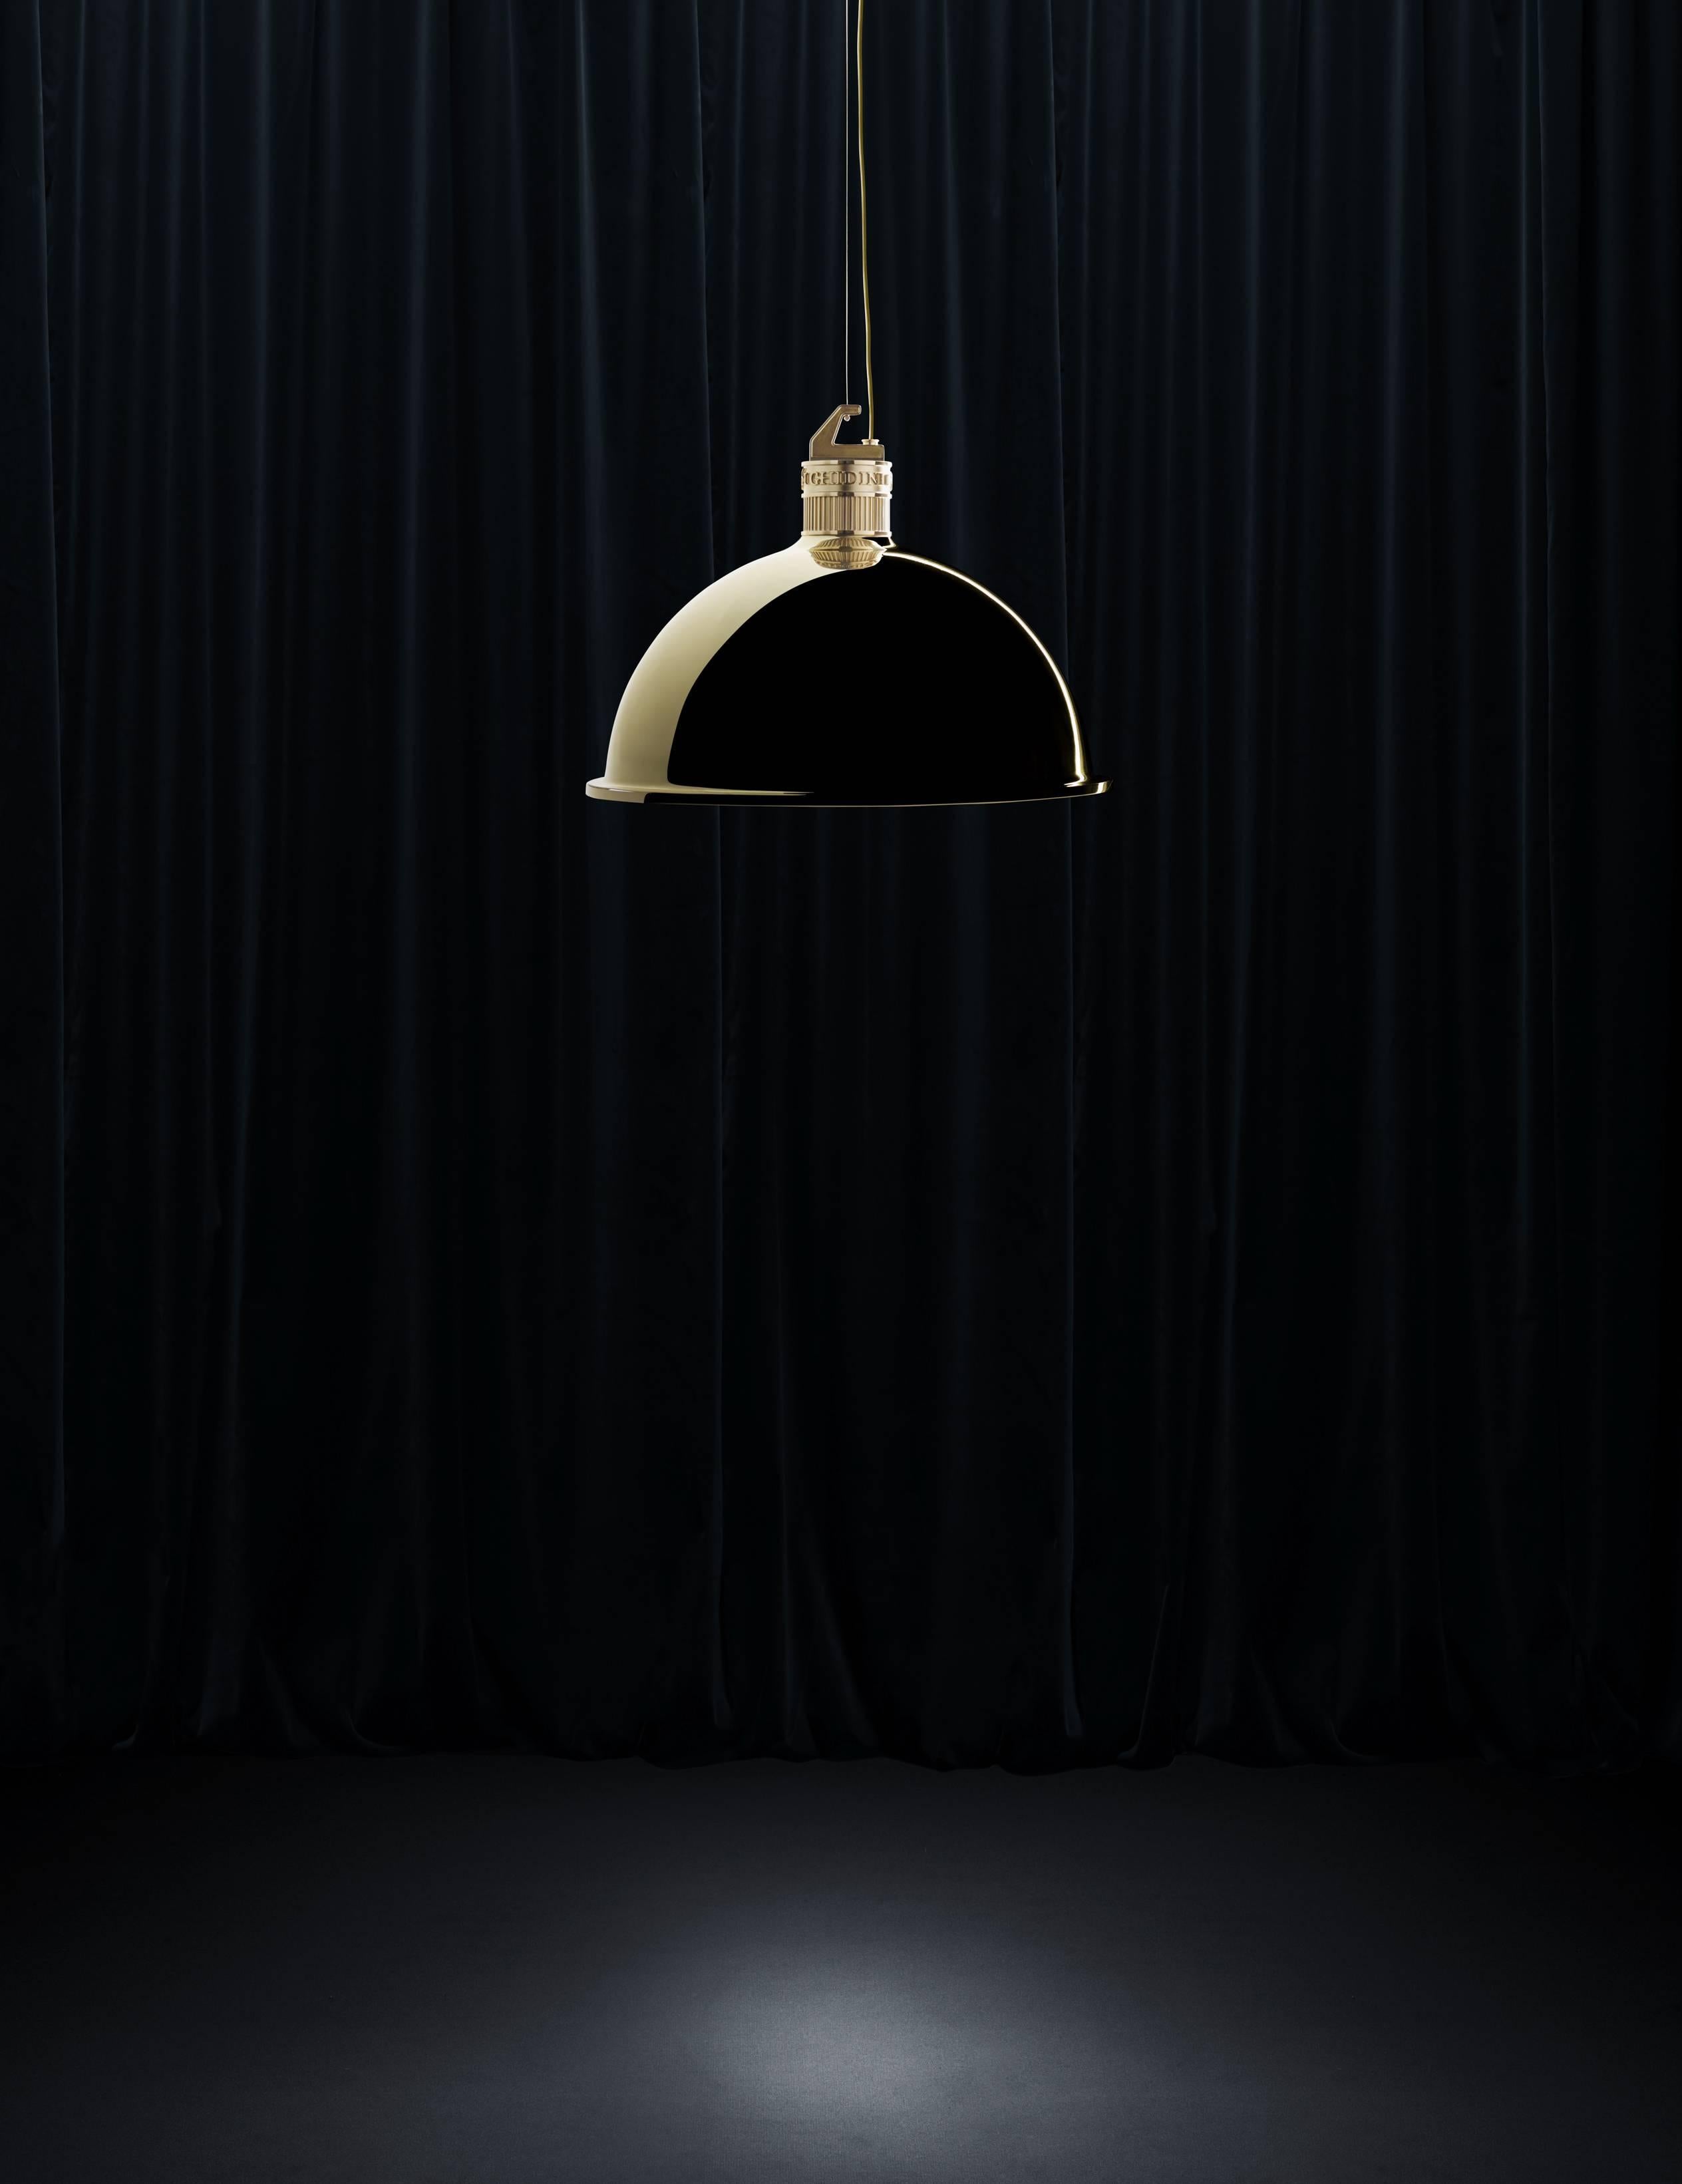 Suspension light in polished brass designed by Elisa Giovannoni.

Diameter: ø 31.5